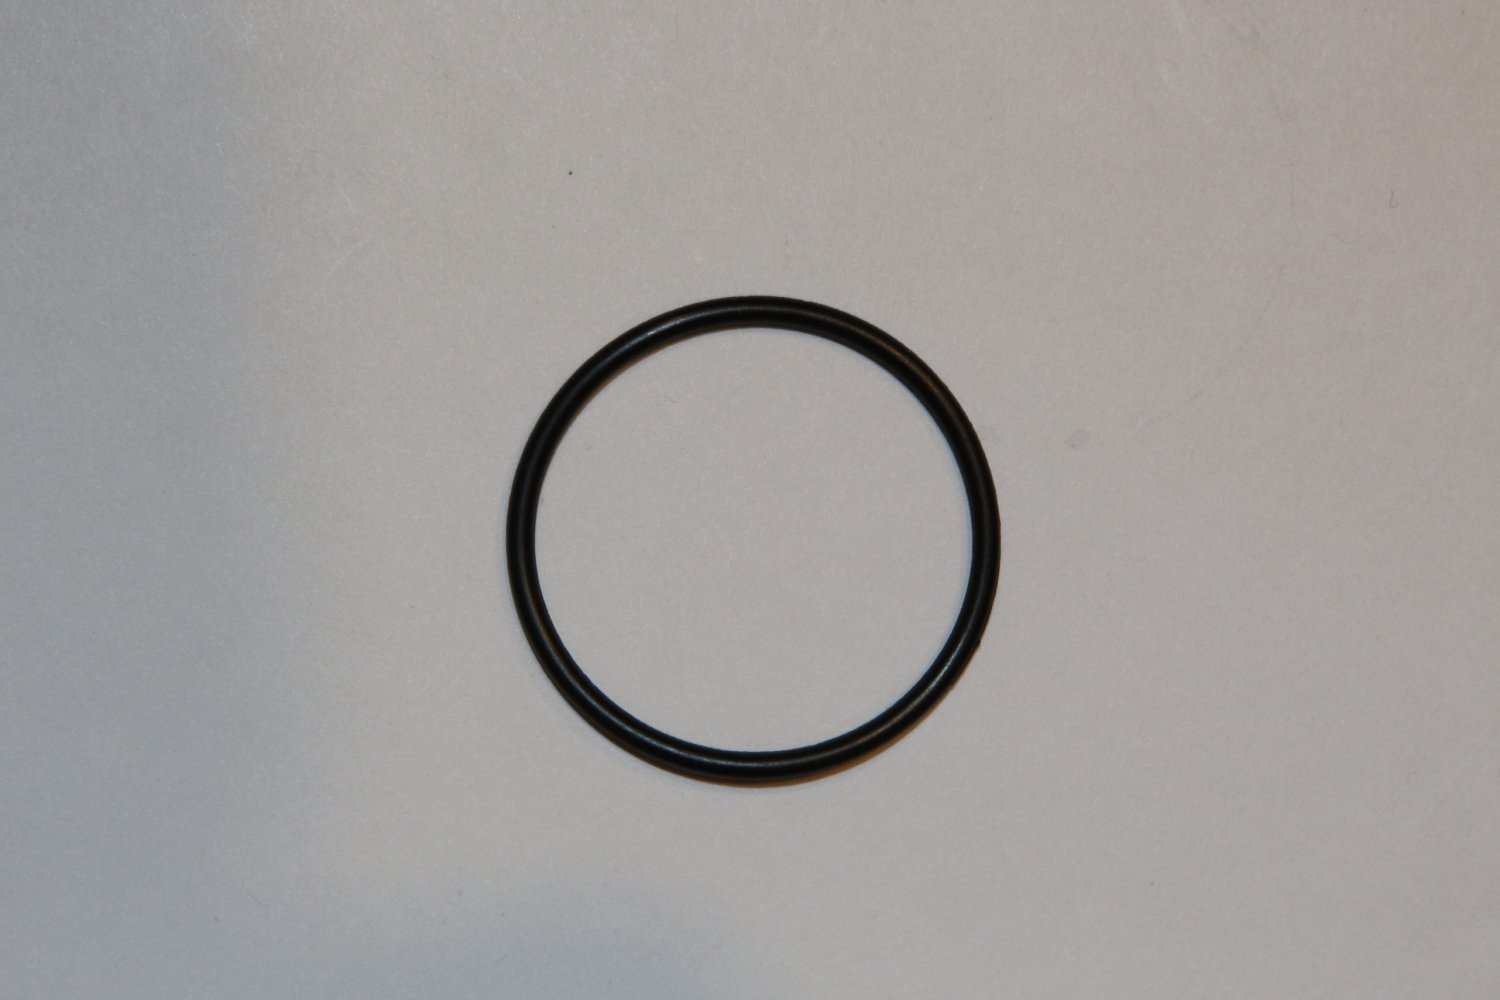 Кольцо уплотнительное WSS О-ринг, 10.82х1.78 мм, AS013 уплотнительное кольцо wss круглого сечения о ринг 5 0x2 0 a подходит для вилок talas i ii iii lower shaft 2005pu